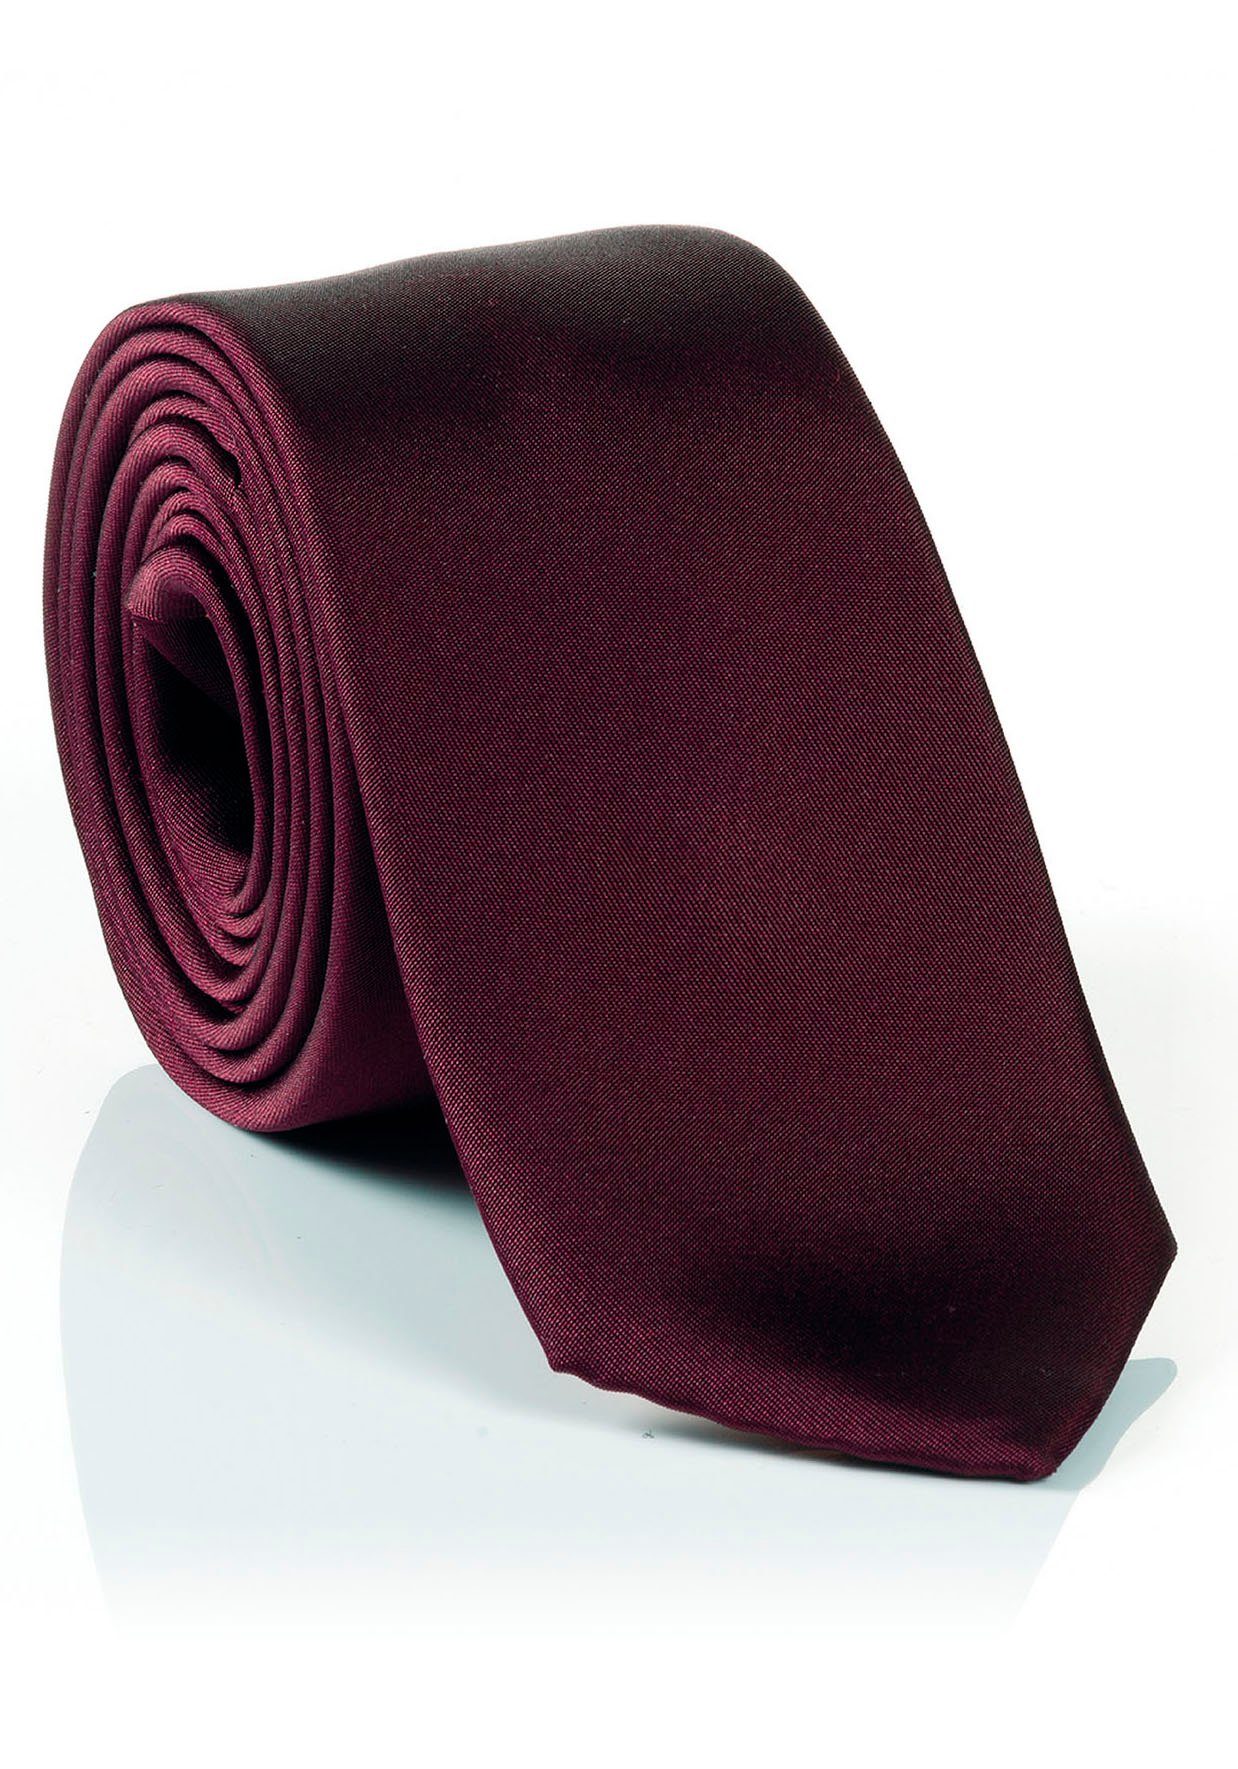 MONTI Krawatte aus reiner Seide, Uni-Pastellfarben bordeaux